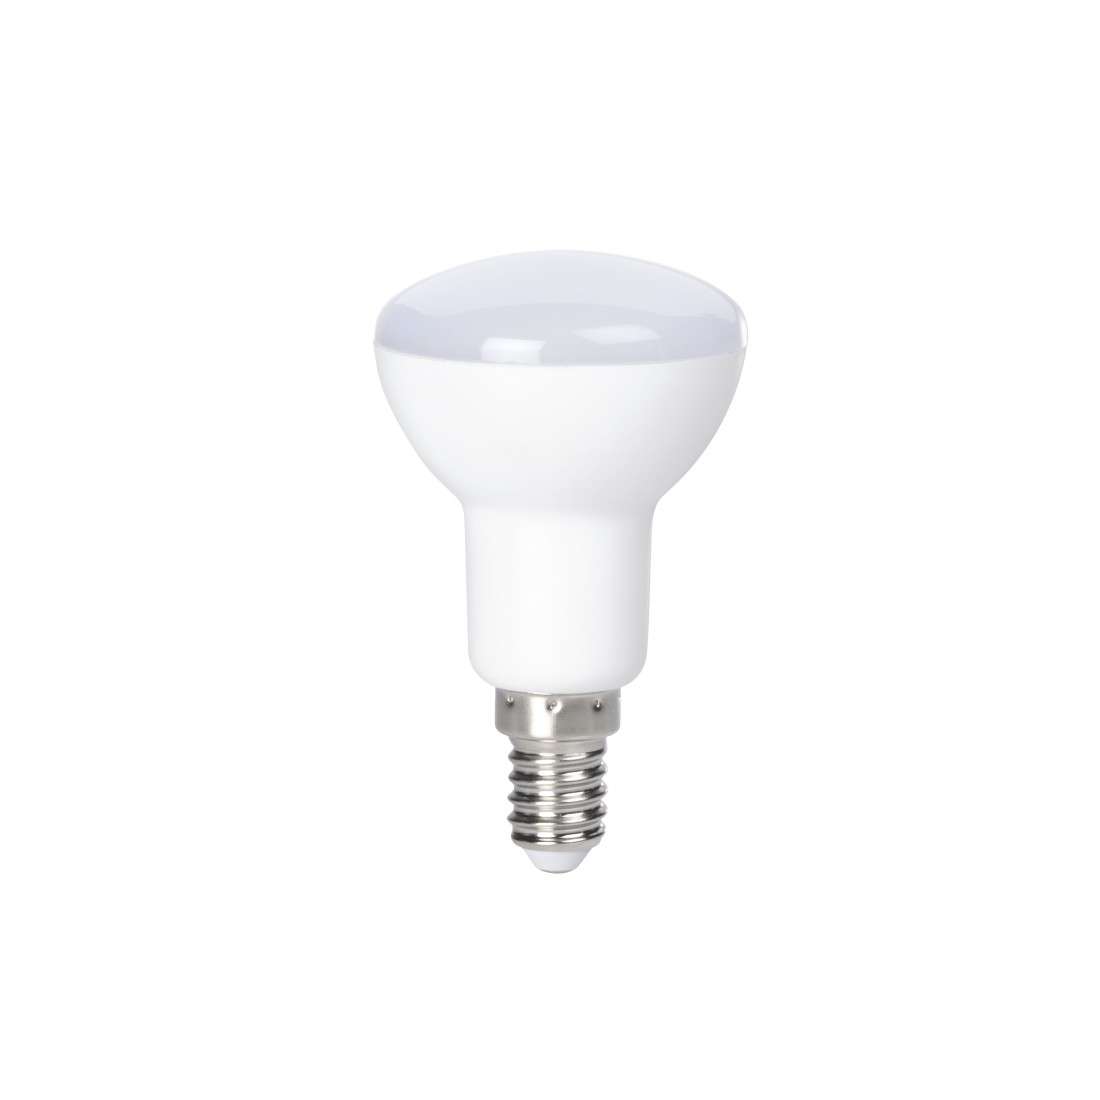 XAVAX LED-Lampe, E14, 470lm ersetzt 40W, Reflektorlampe R50, Warmweiß